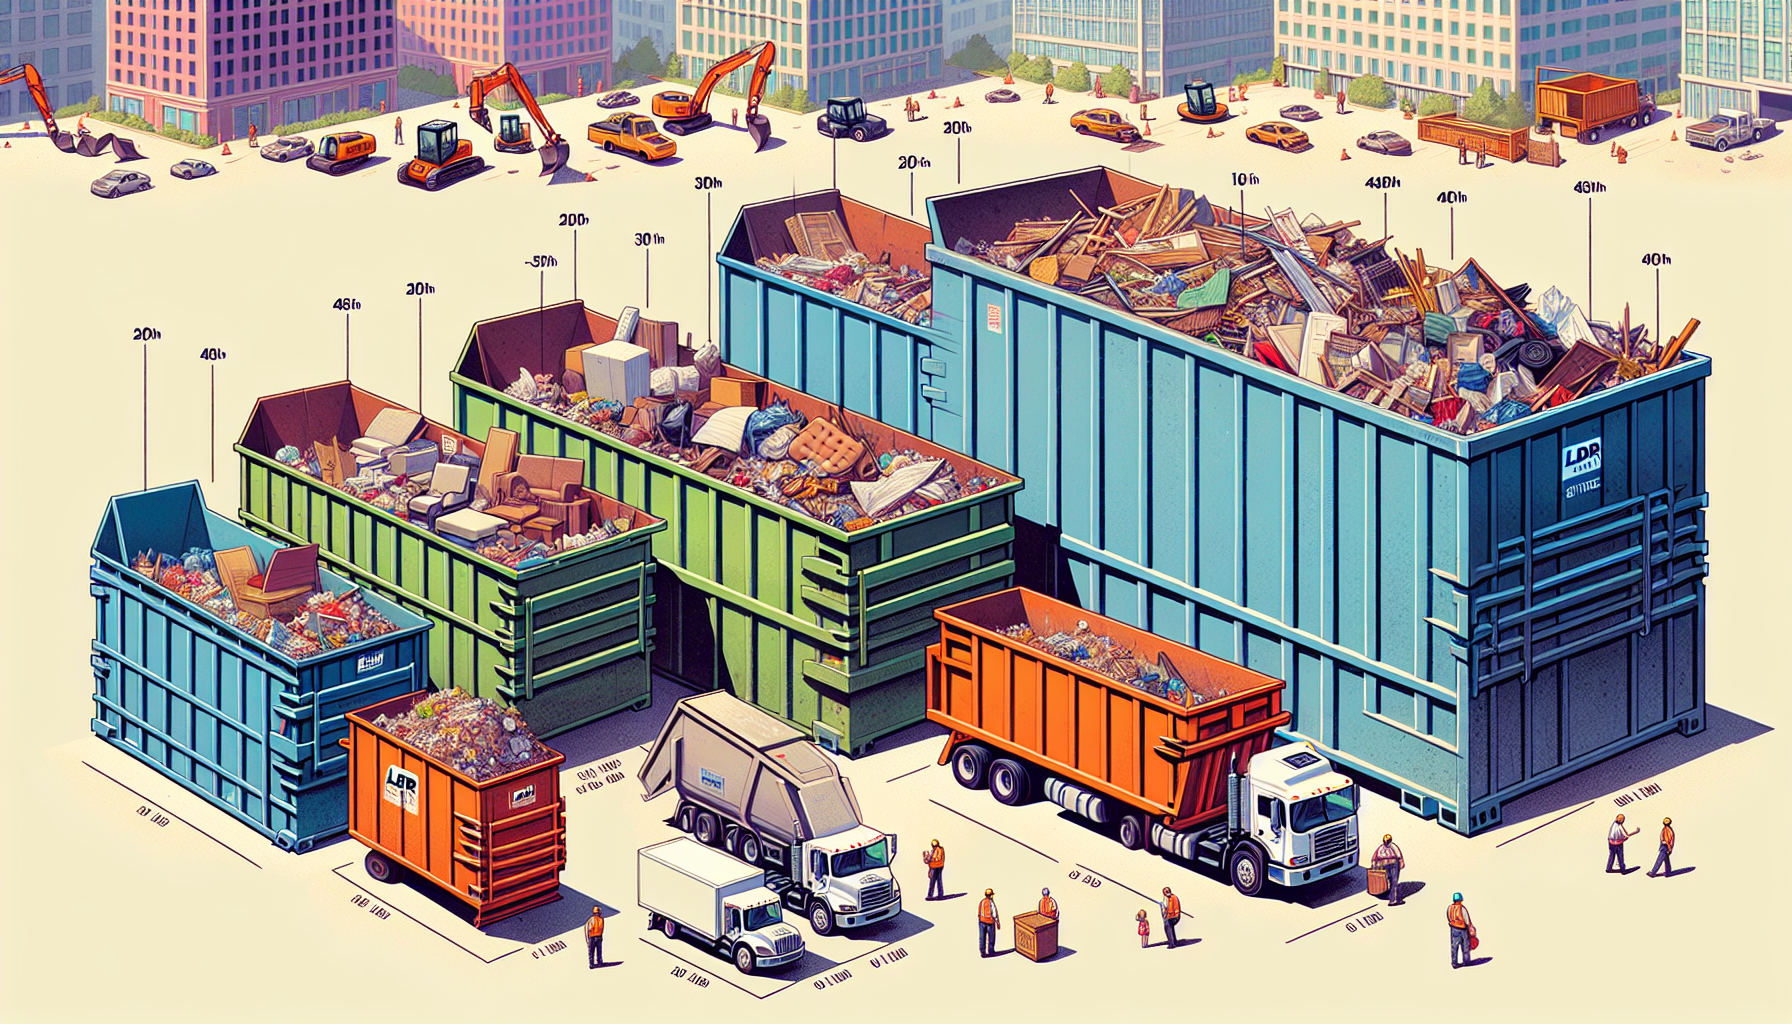 Illustration of different dumpster sizes